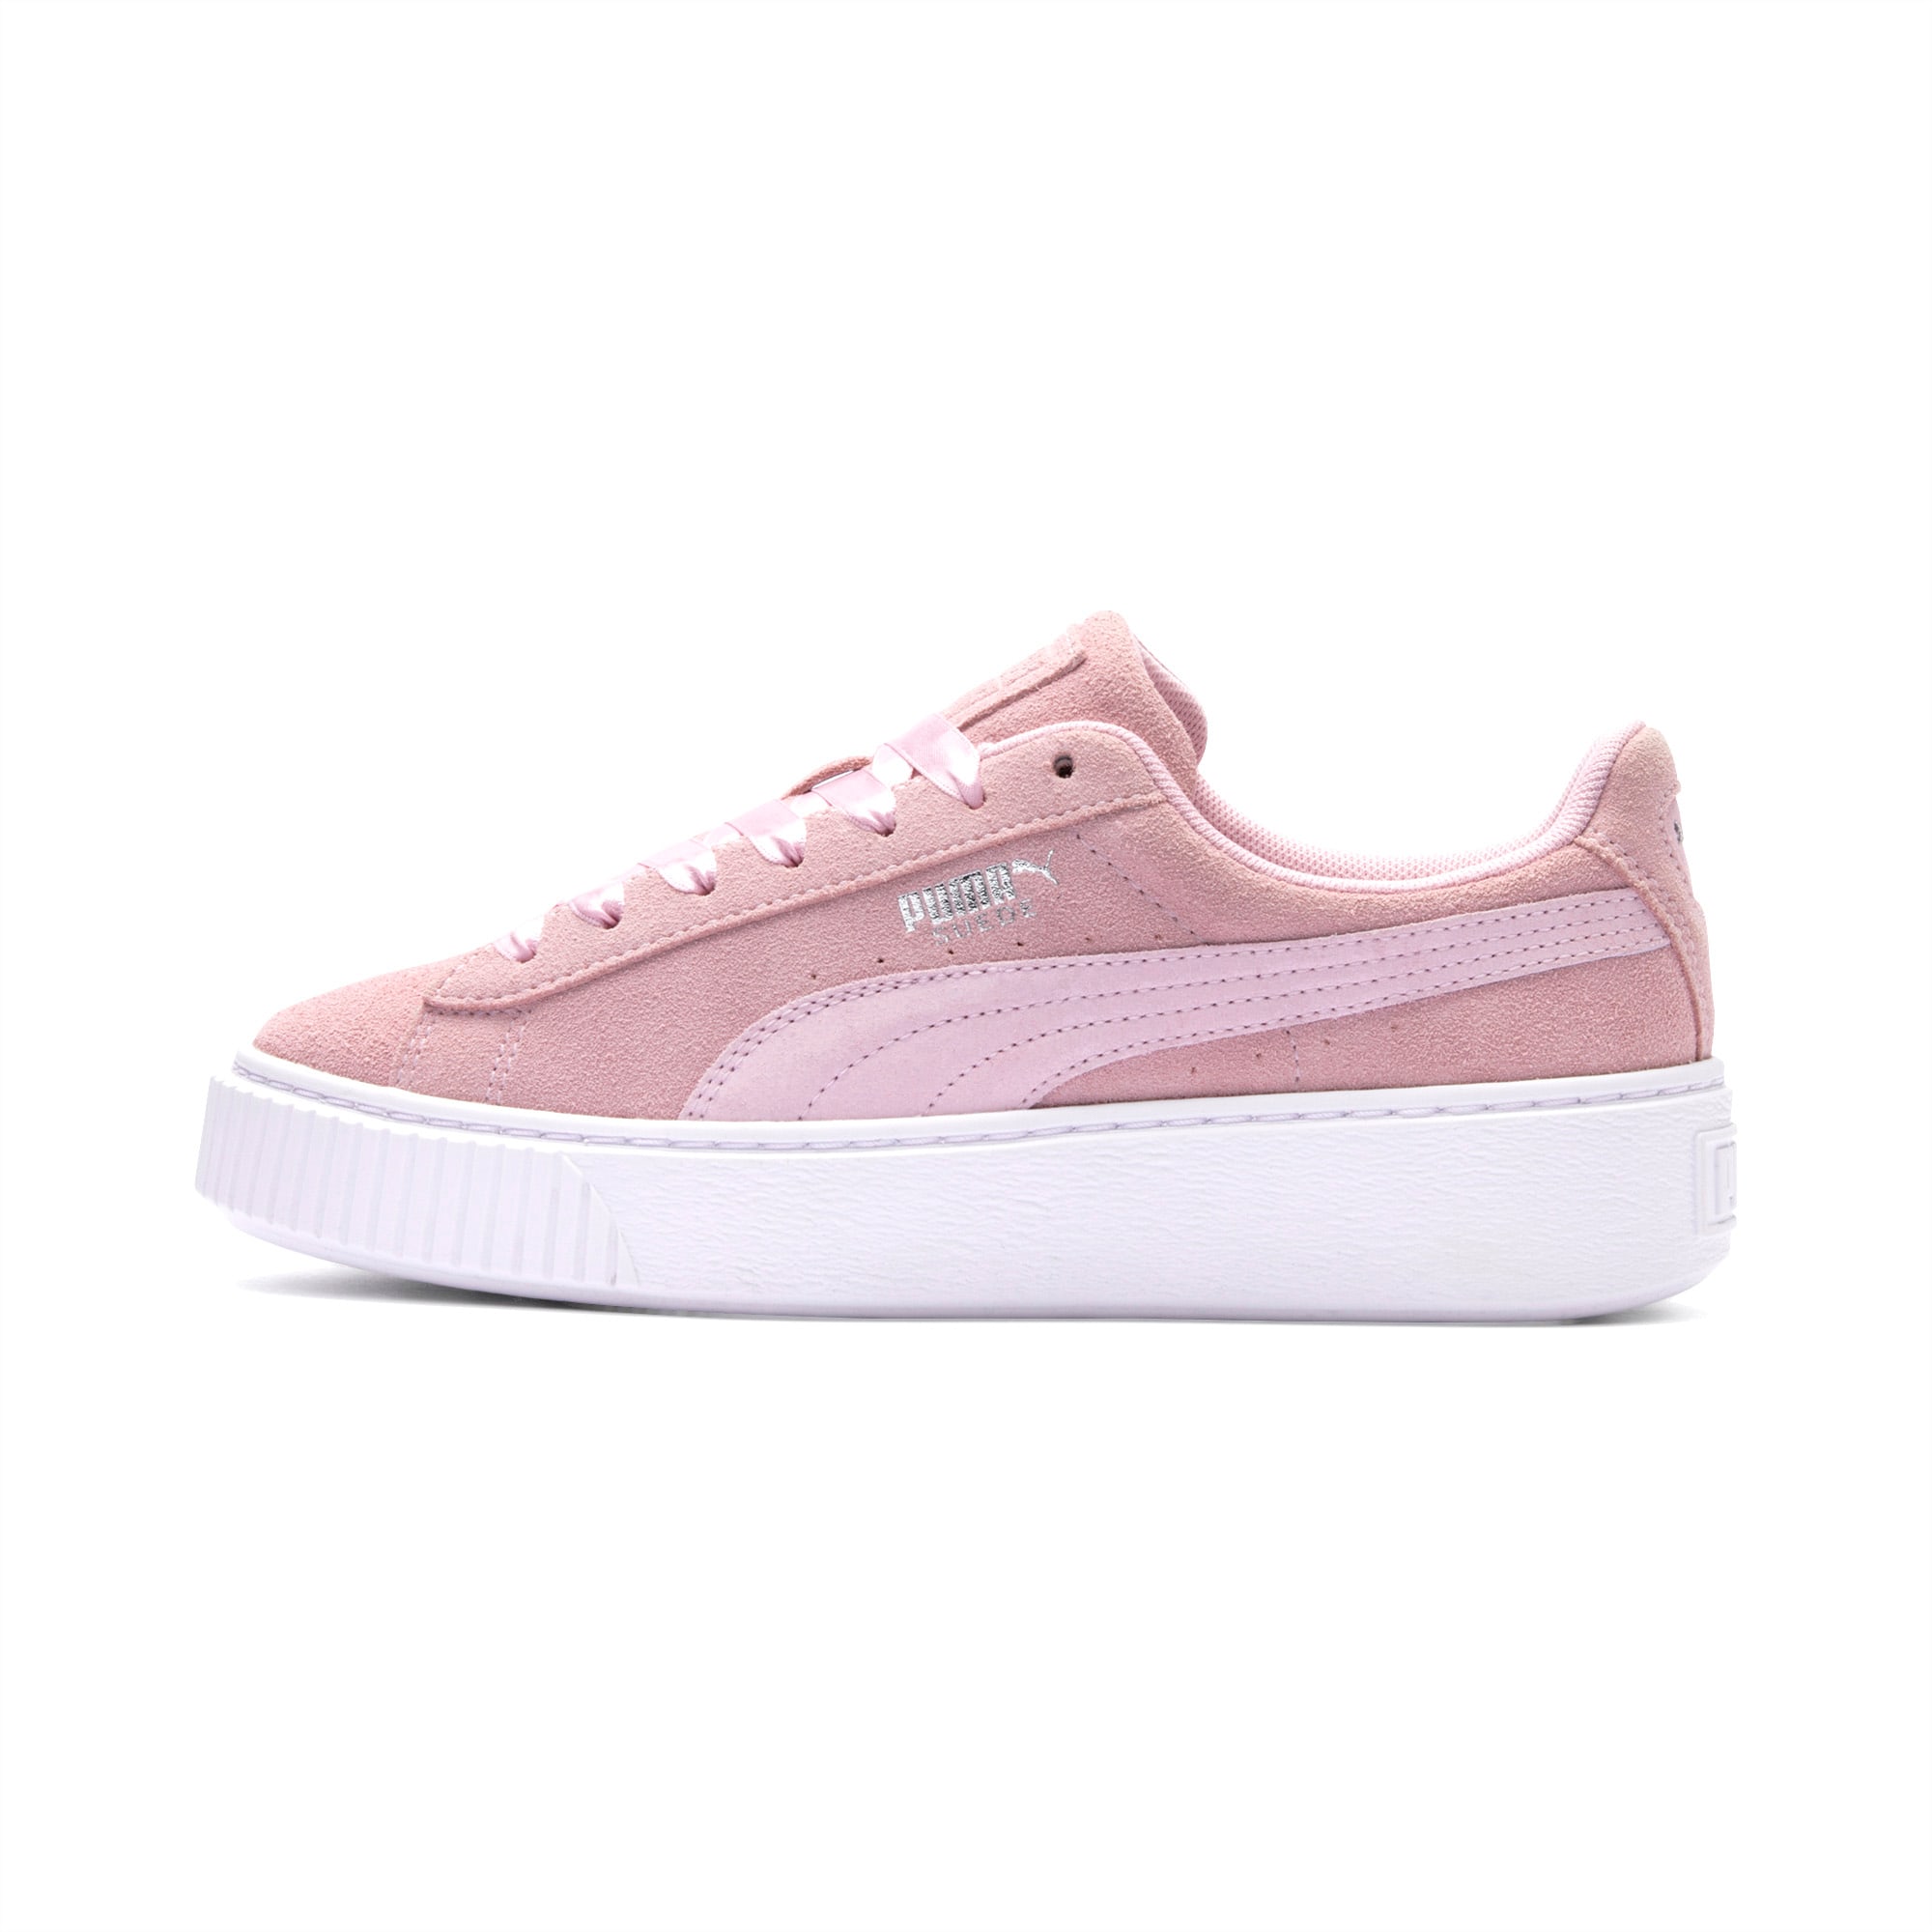 puma pink platform sneakers